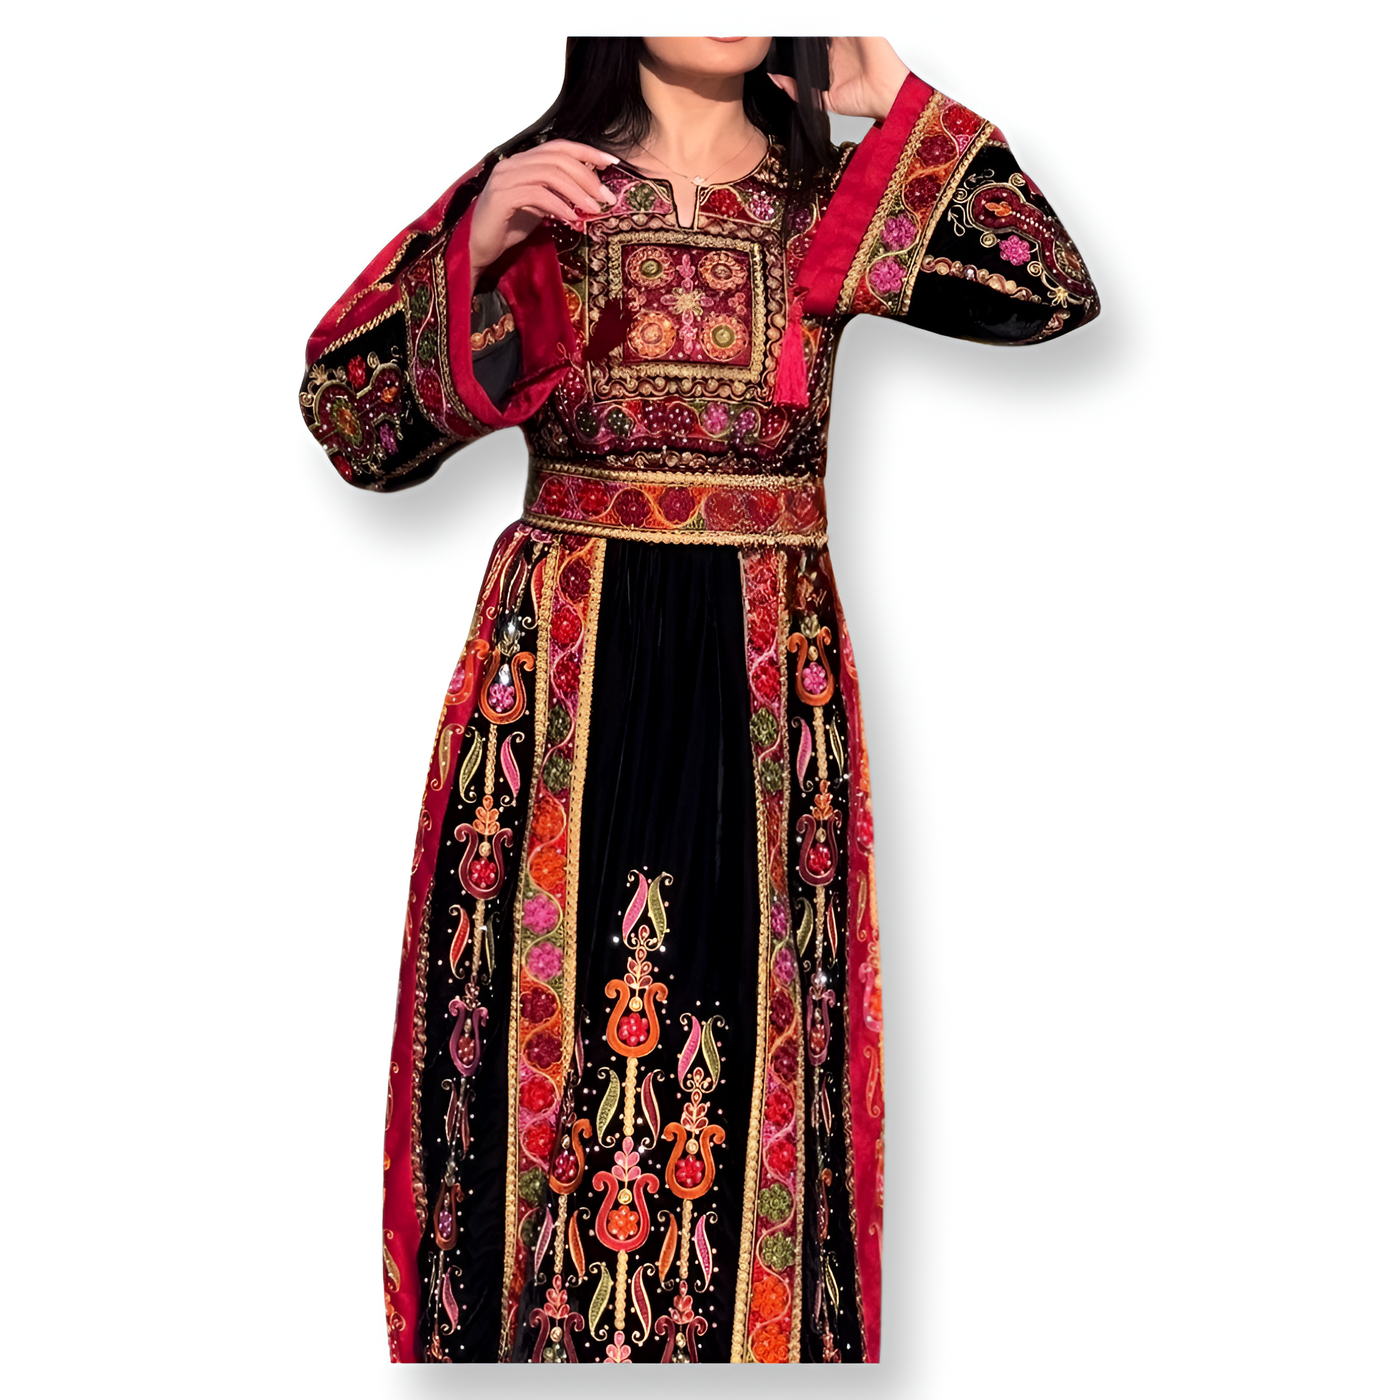 Palestinian Beauty/جمال فلسطيني - Very High Quality Traditional Embroidered Palestinian Thobe